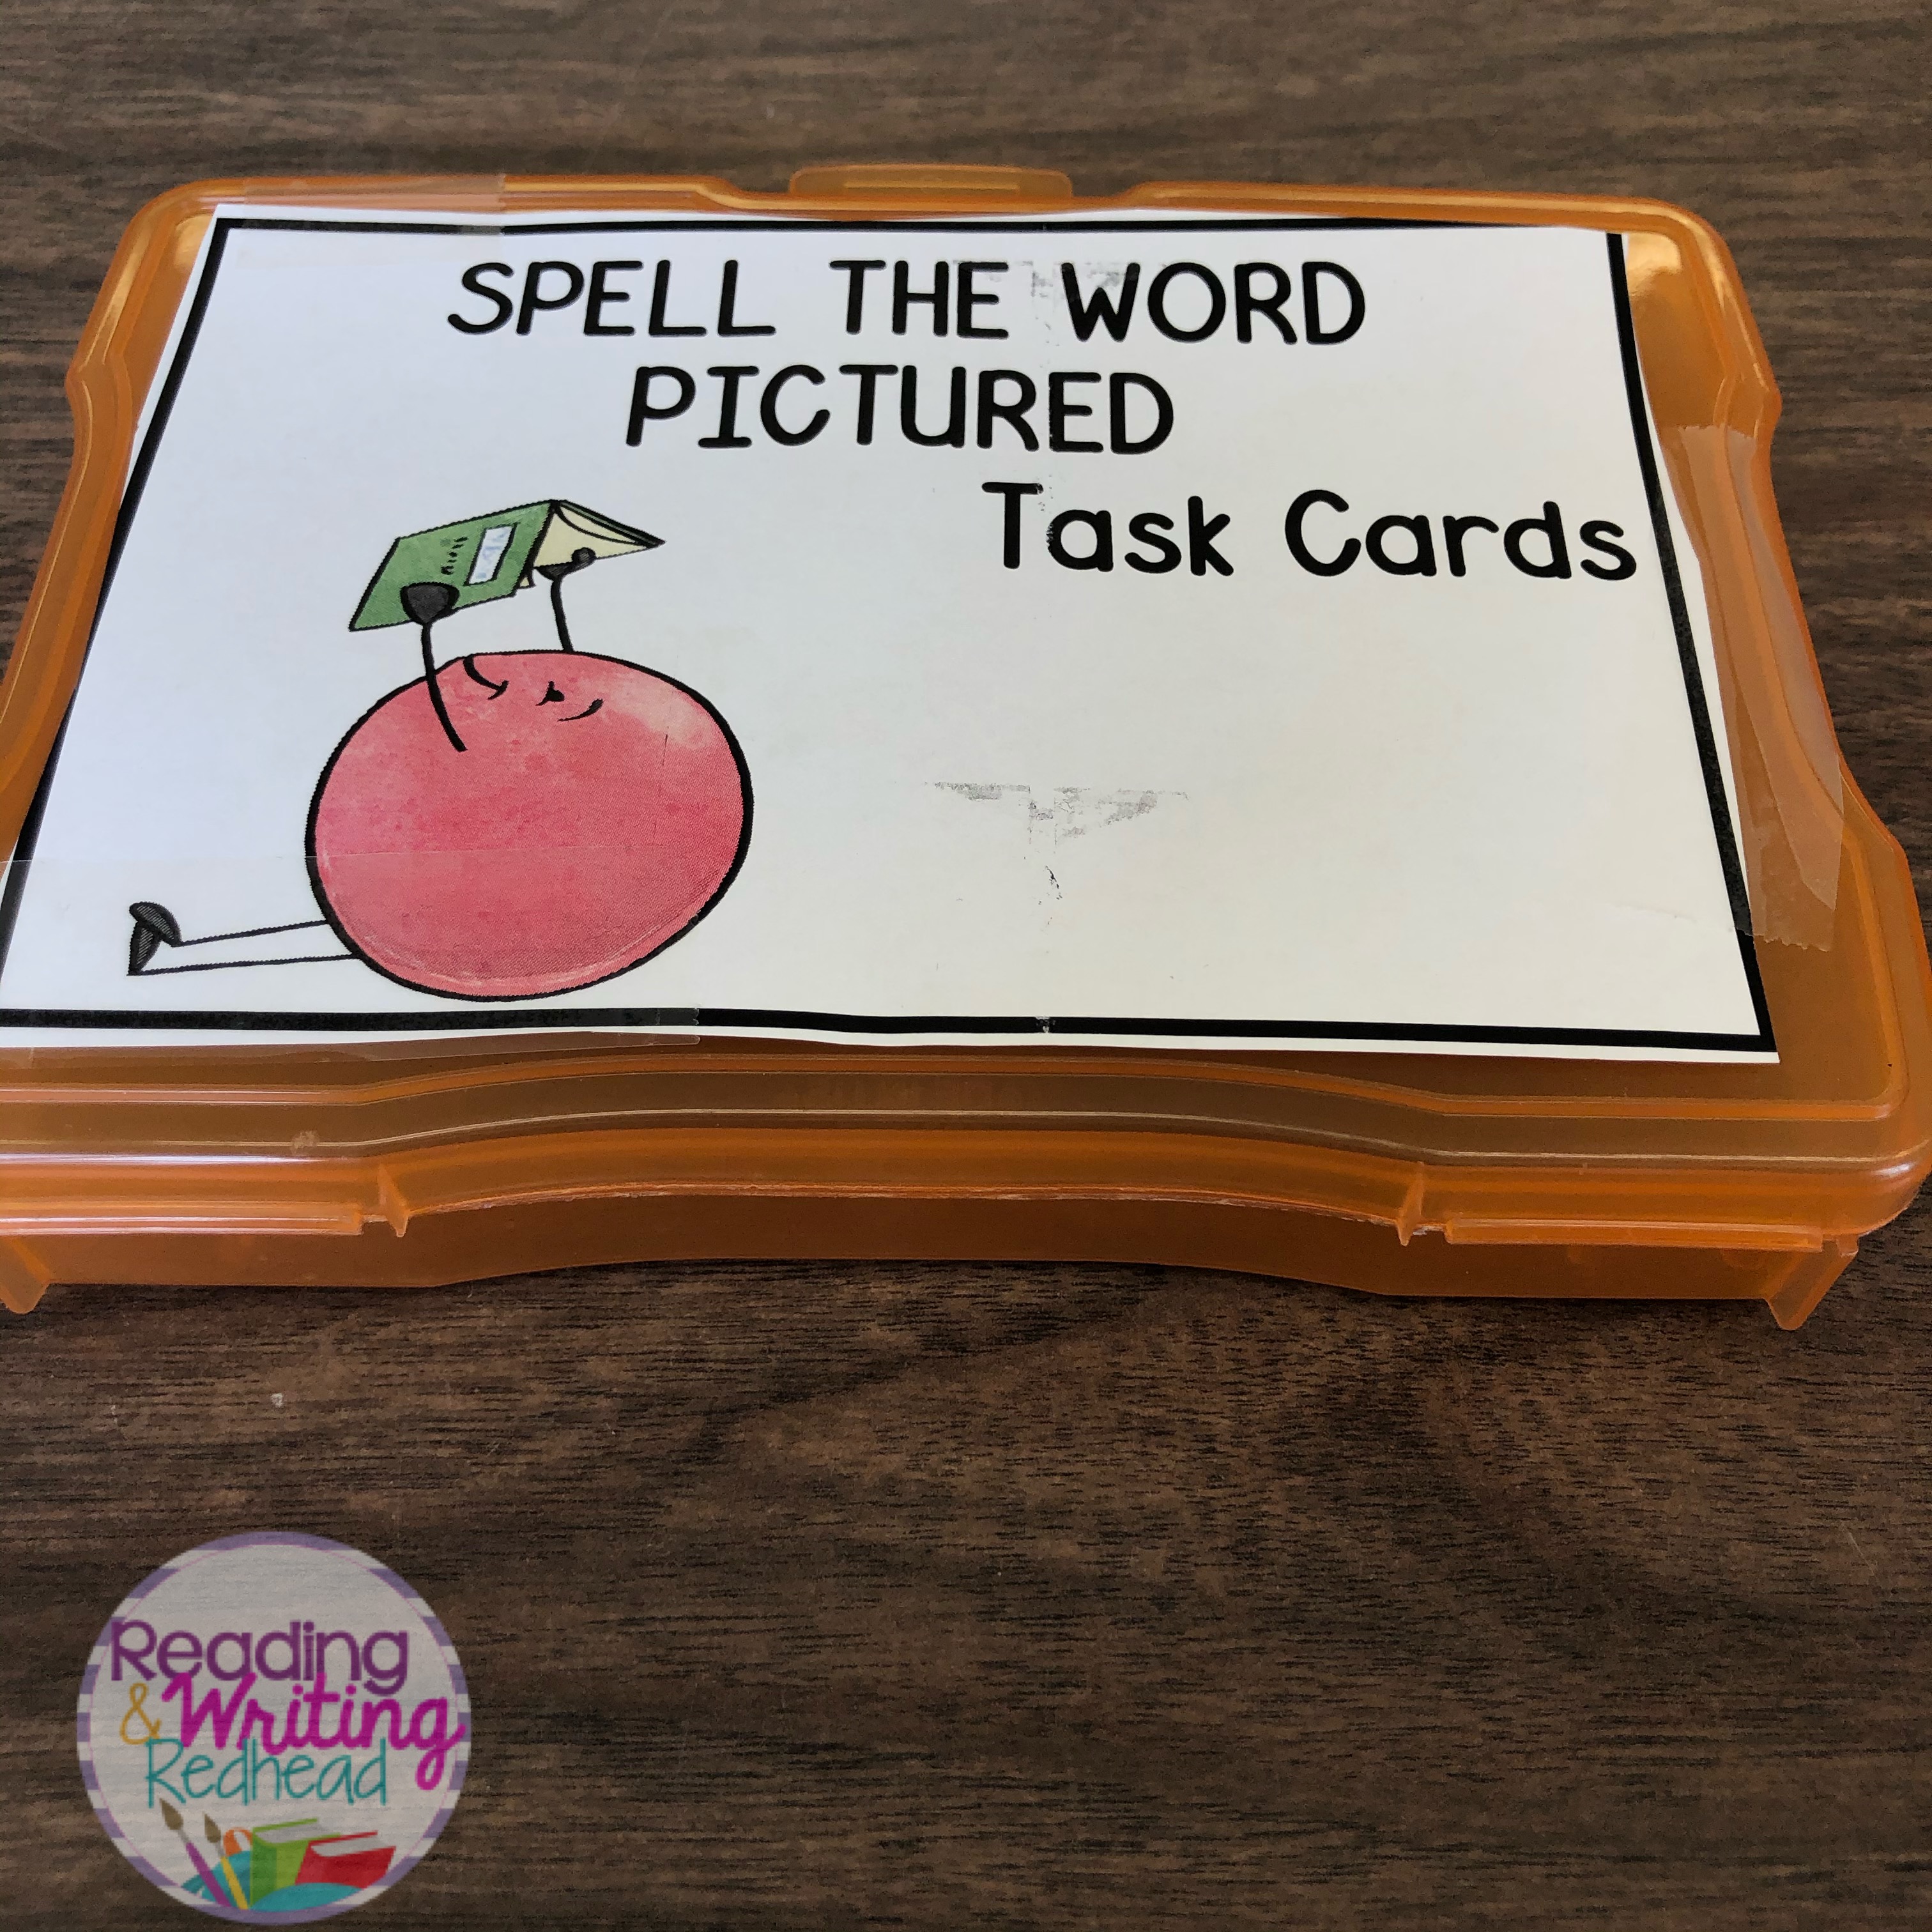 task Cards in Iris photo box